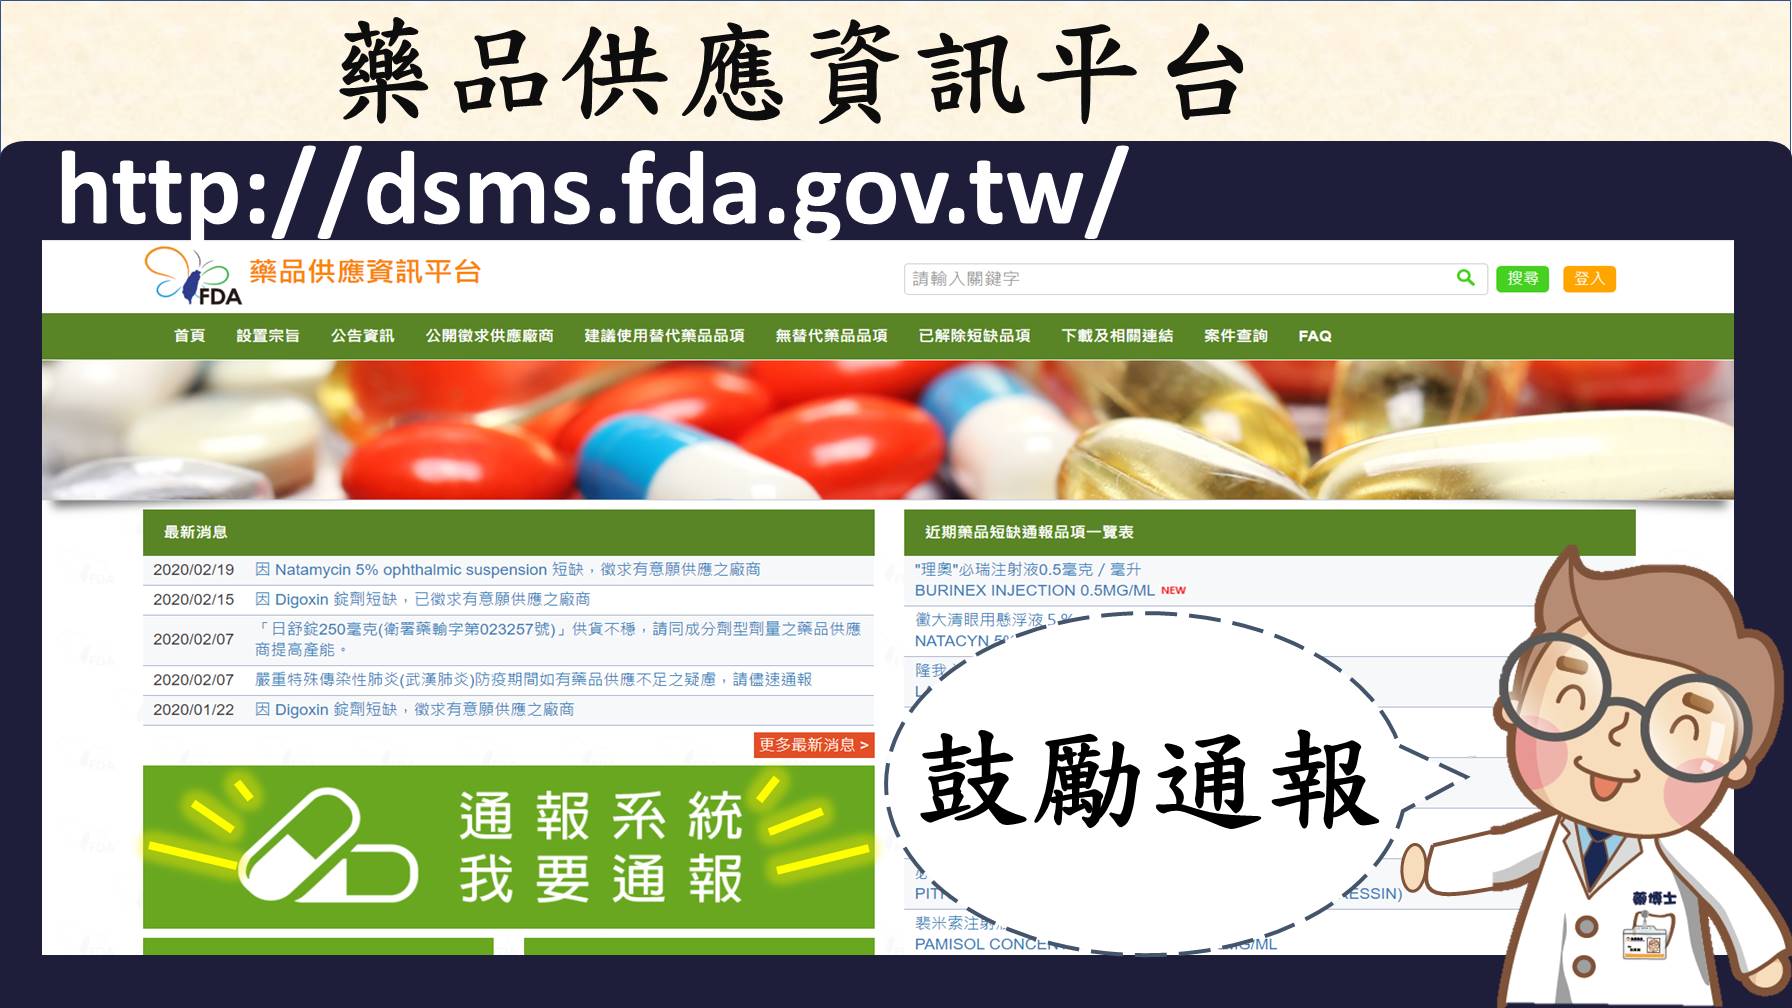 藥品供應資訊平台(http://dsms.fda.gov.tw/)